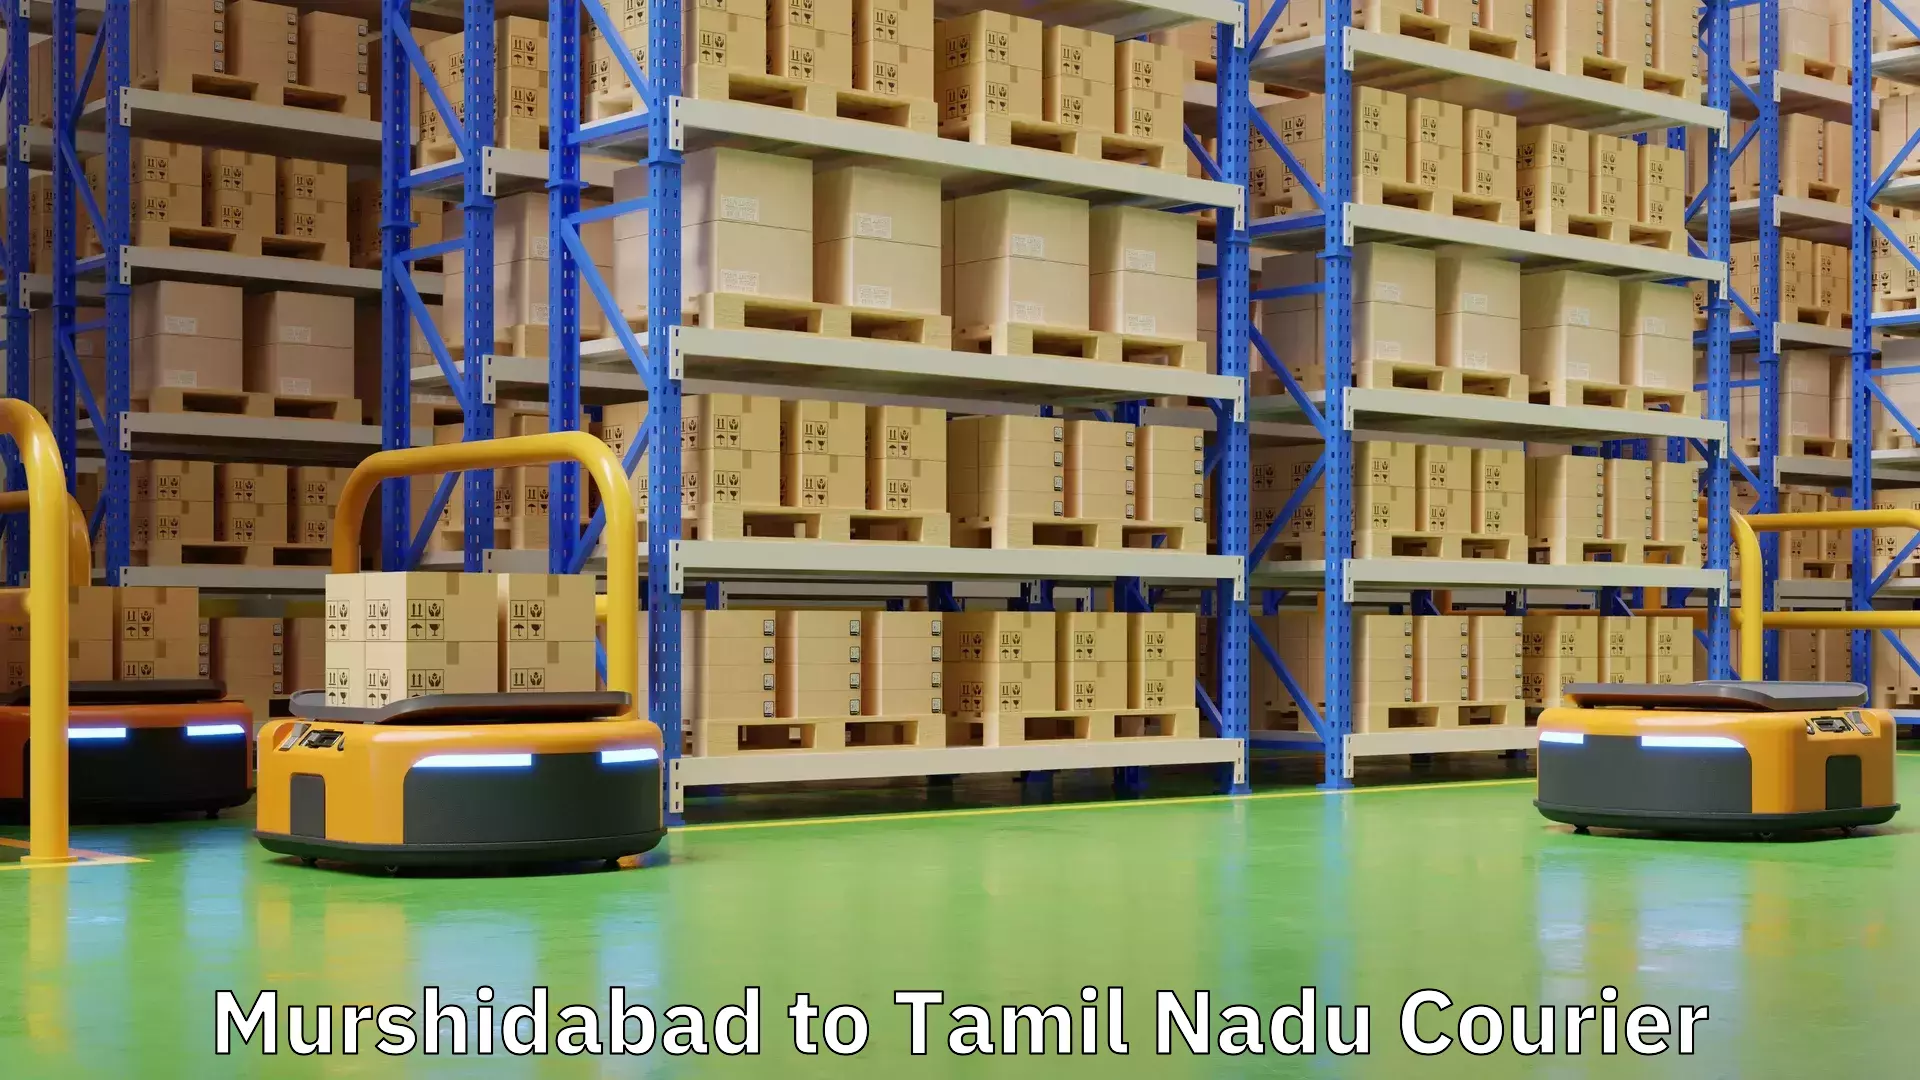 Enhanced shipping experience in Murshidabad to Tamil Nadu